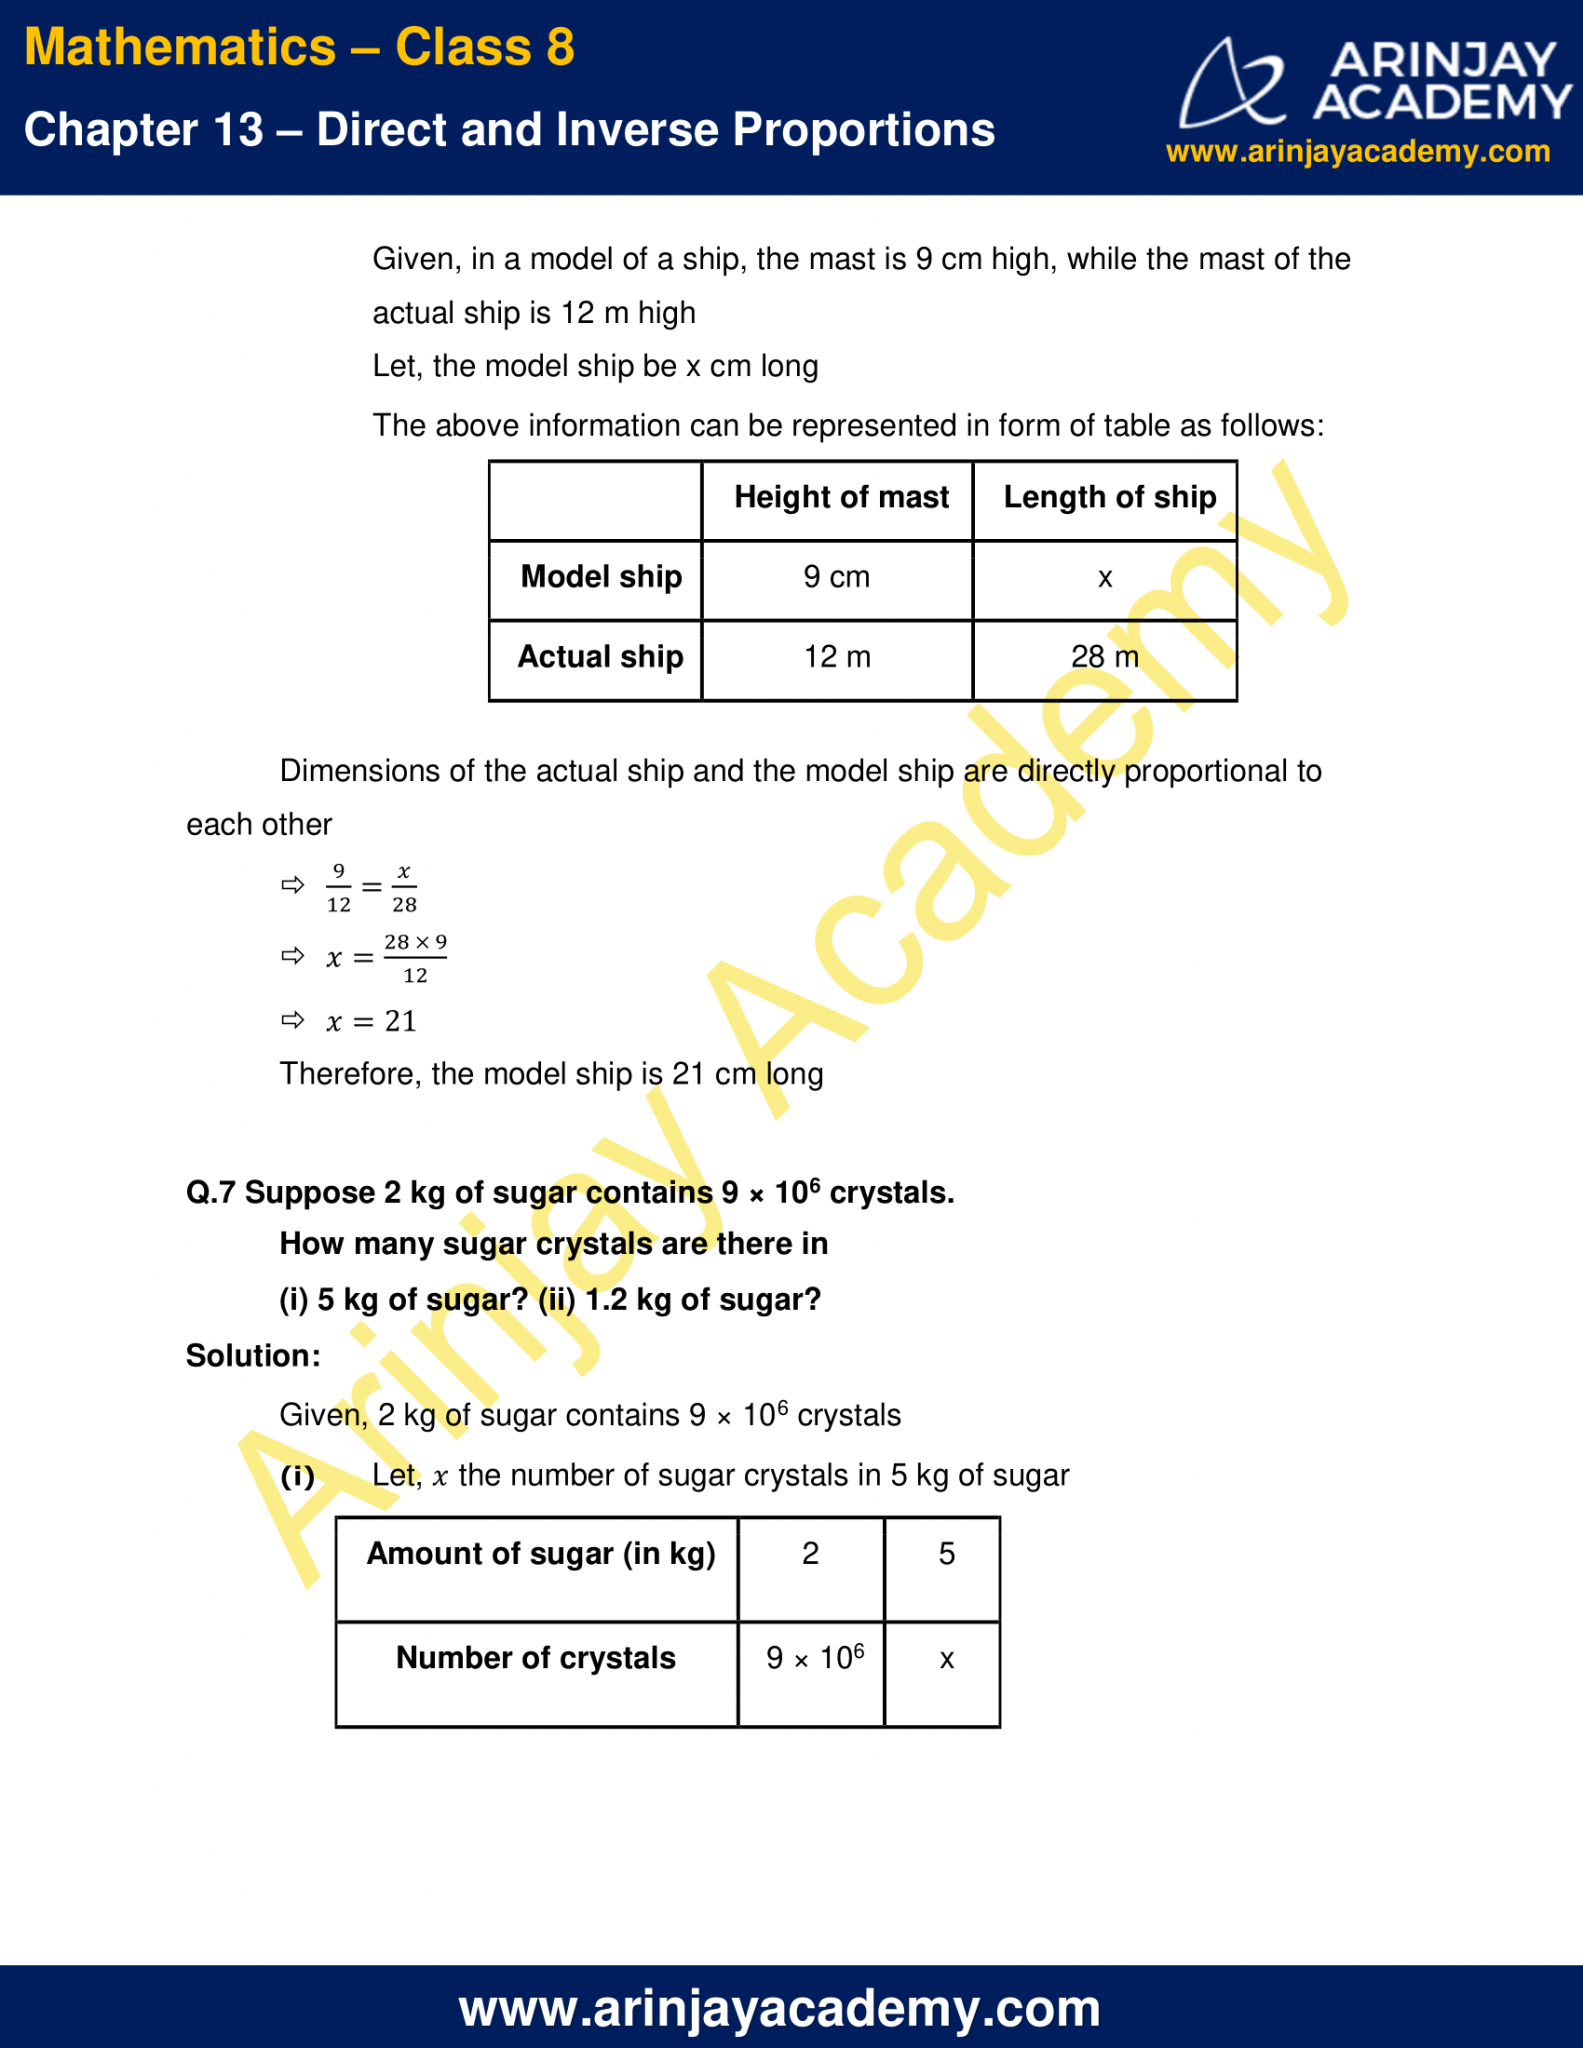 case study questions class 8 maths pdf